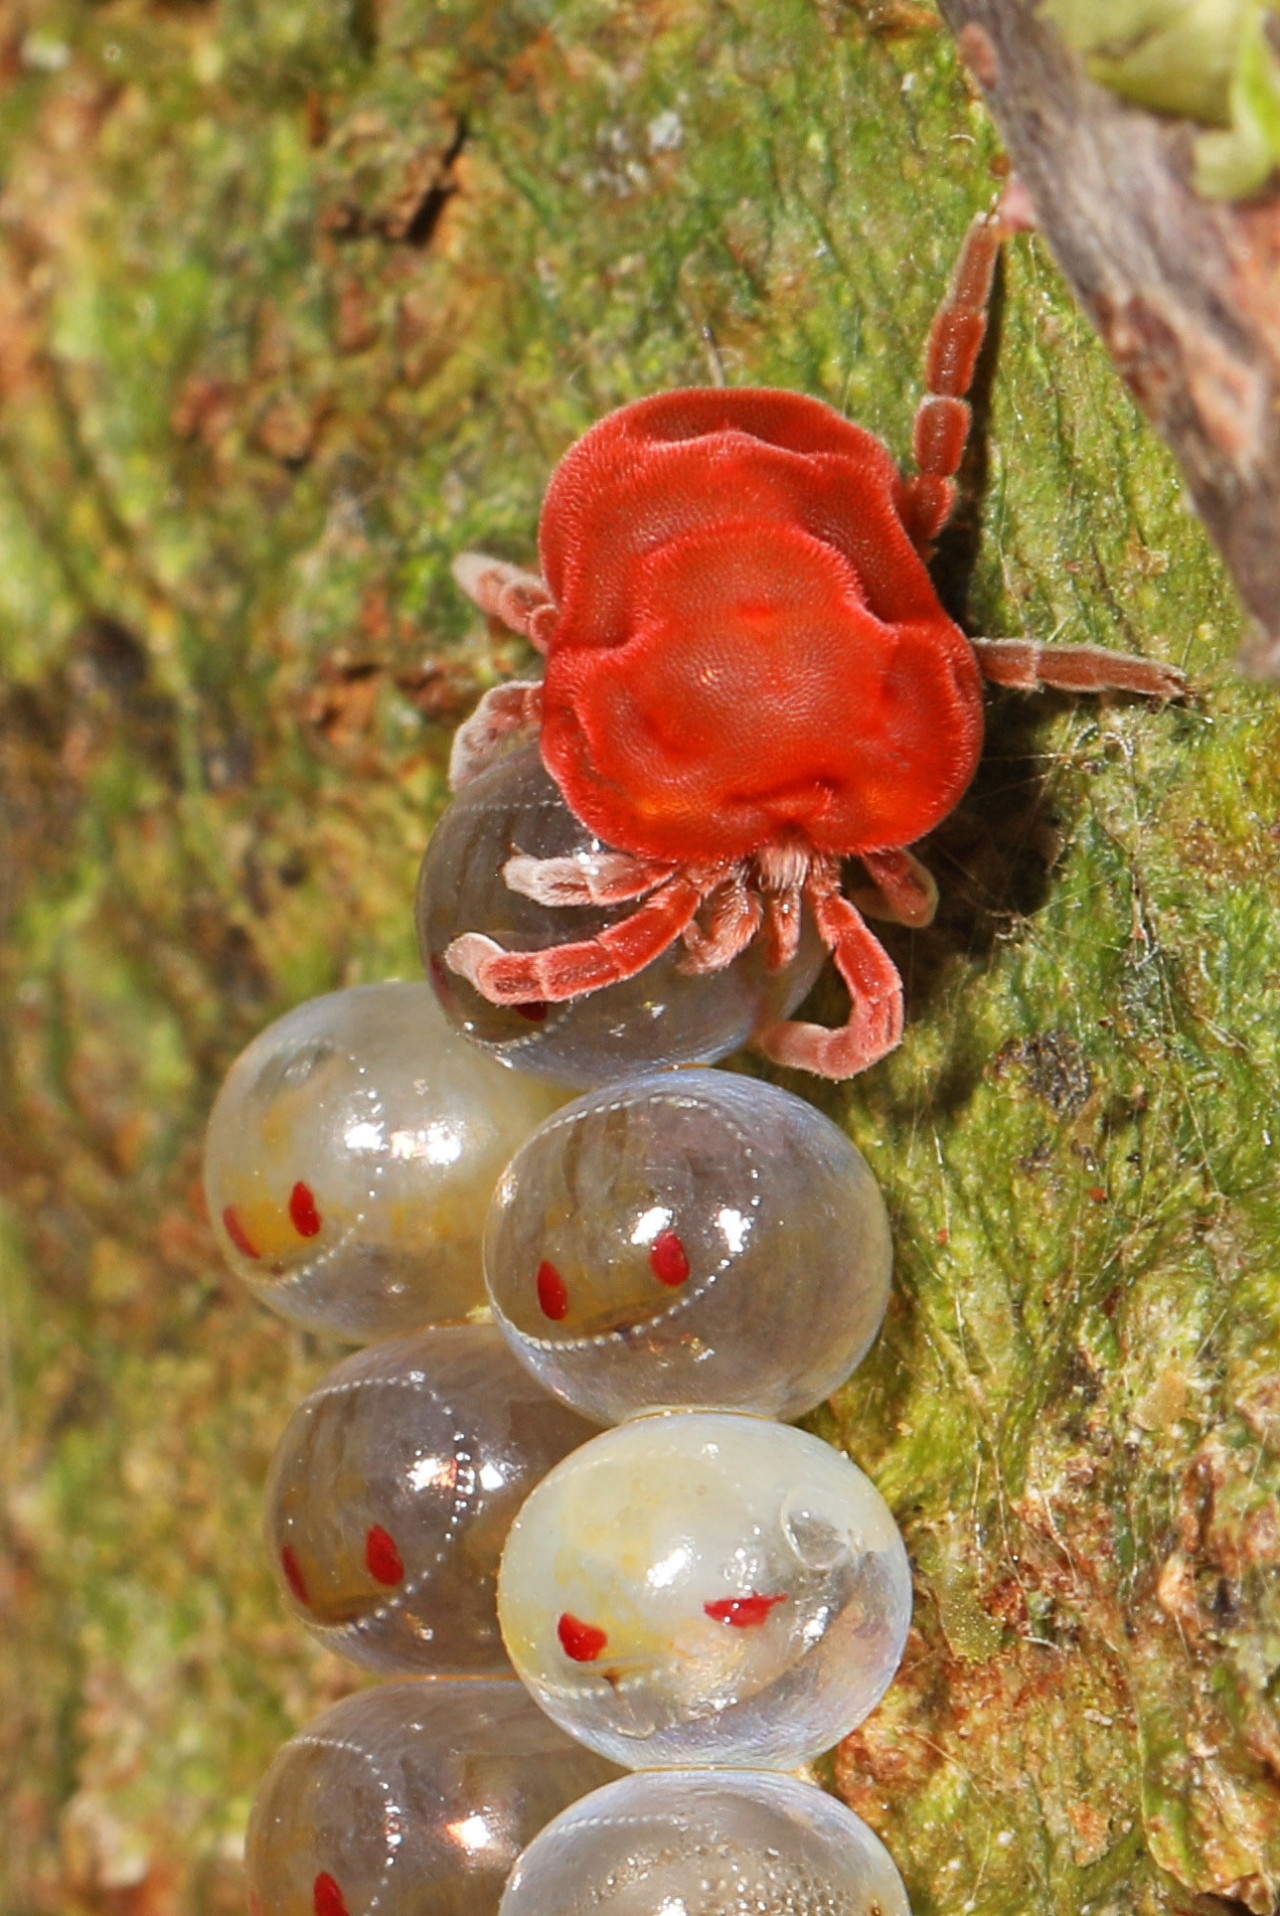 Velvet mite, Trombidium sp.?, Trombidiidae, with Hemipteran eggs
Photographed in Ecuador by Judy Gallagher